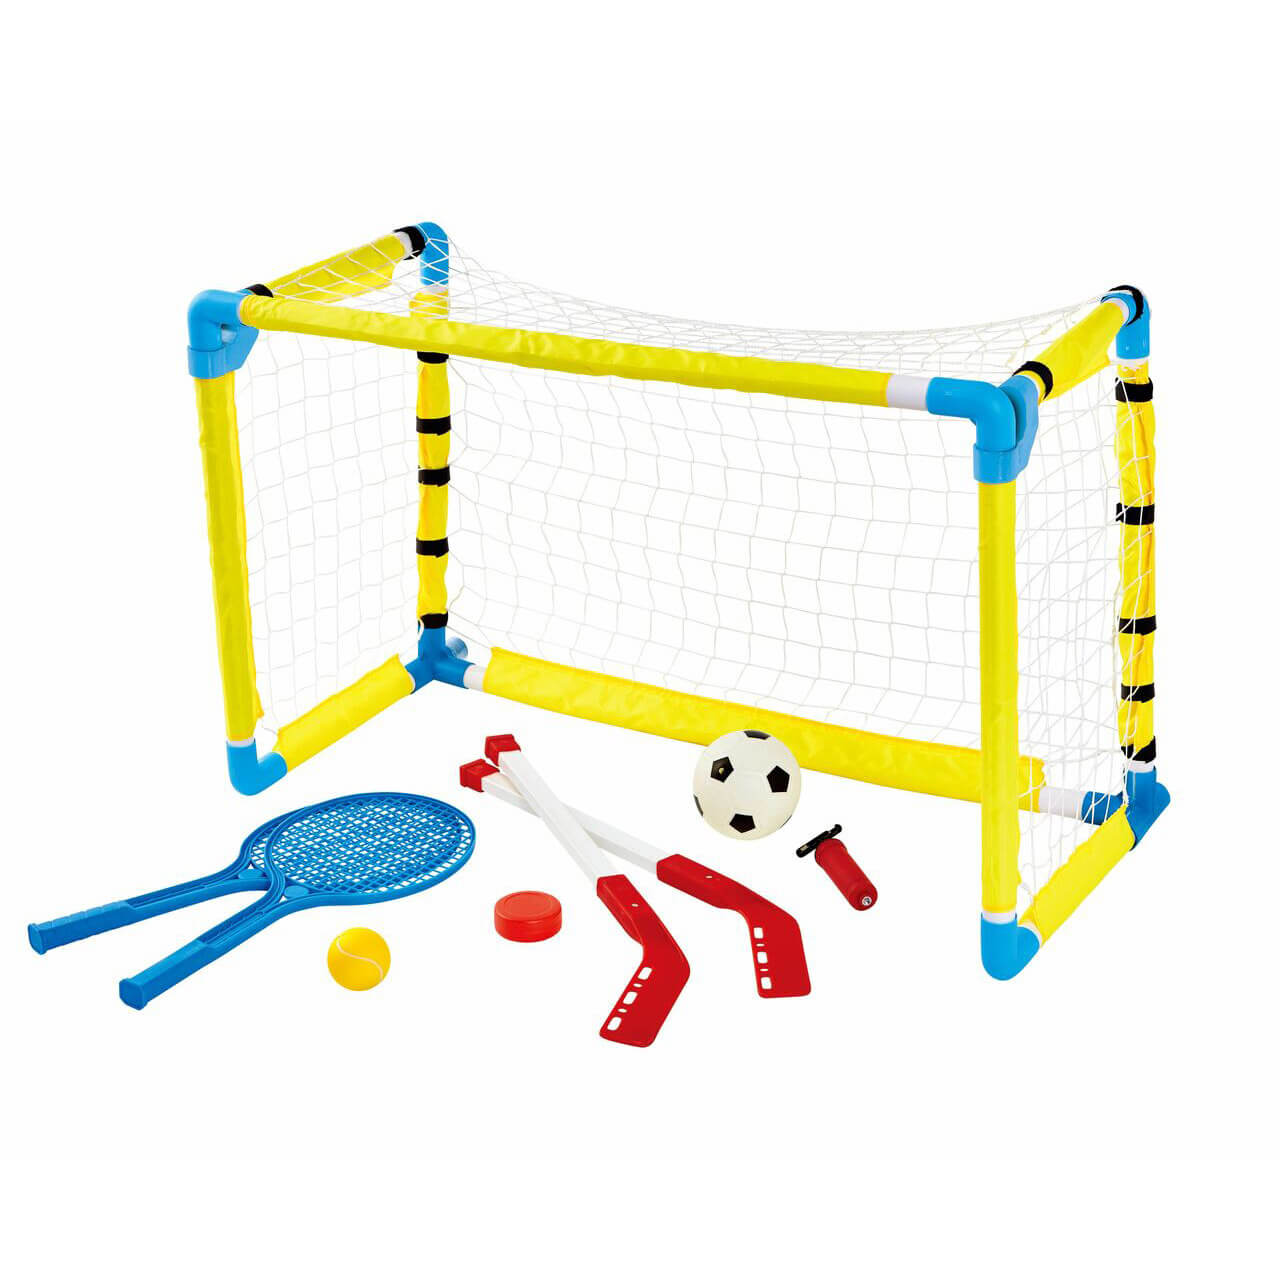 NSG Sports 3-in-1 Combo Soccer, Tennis, Hockey Set